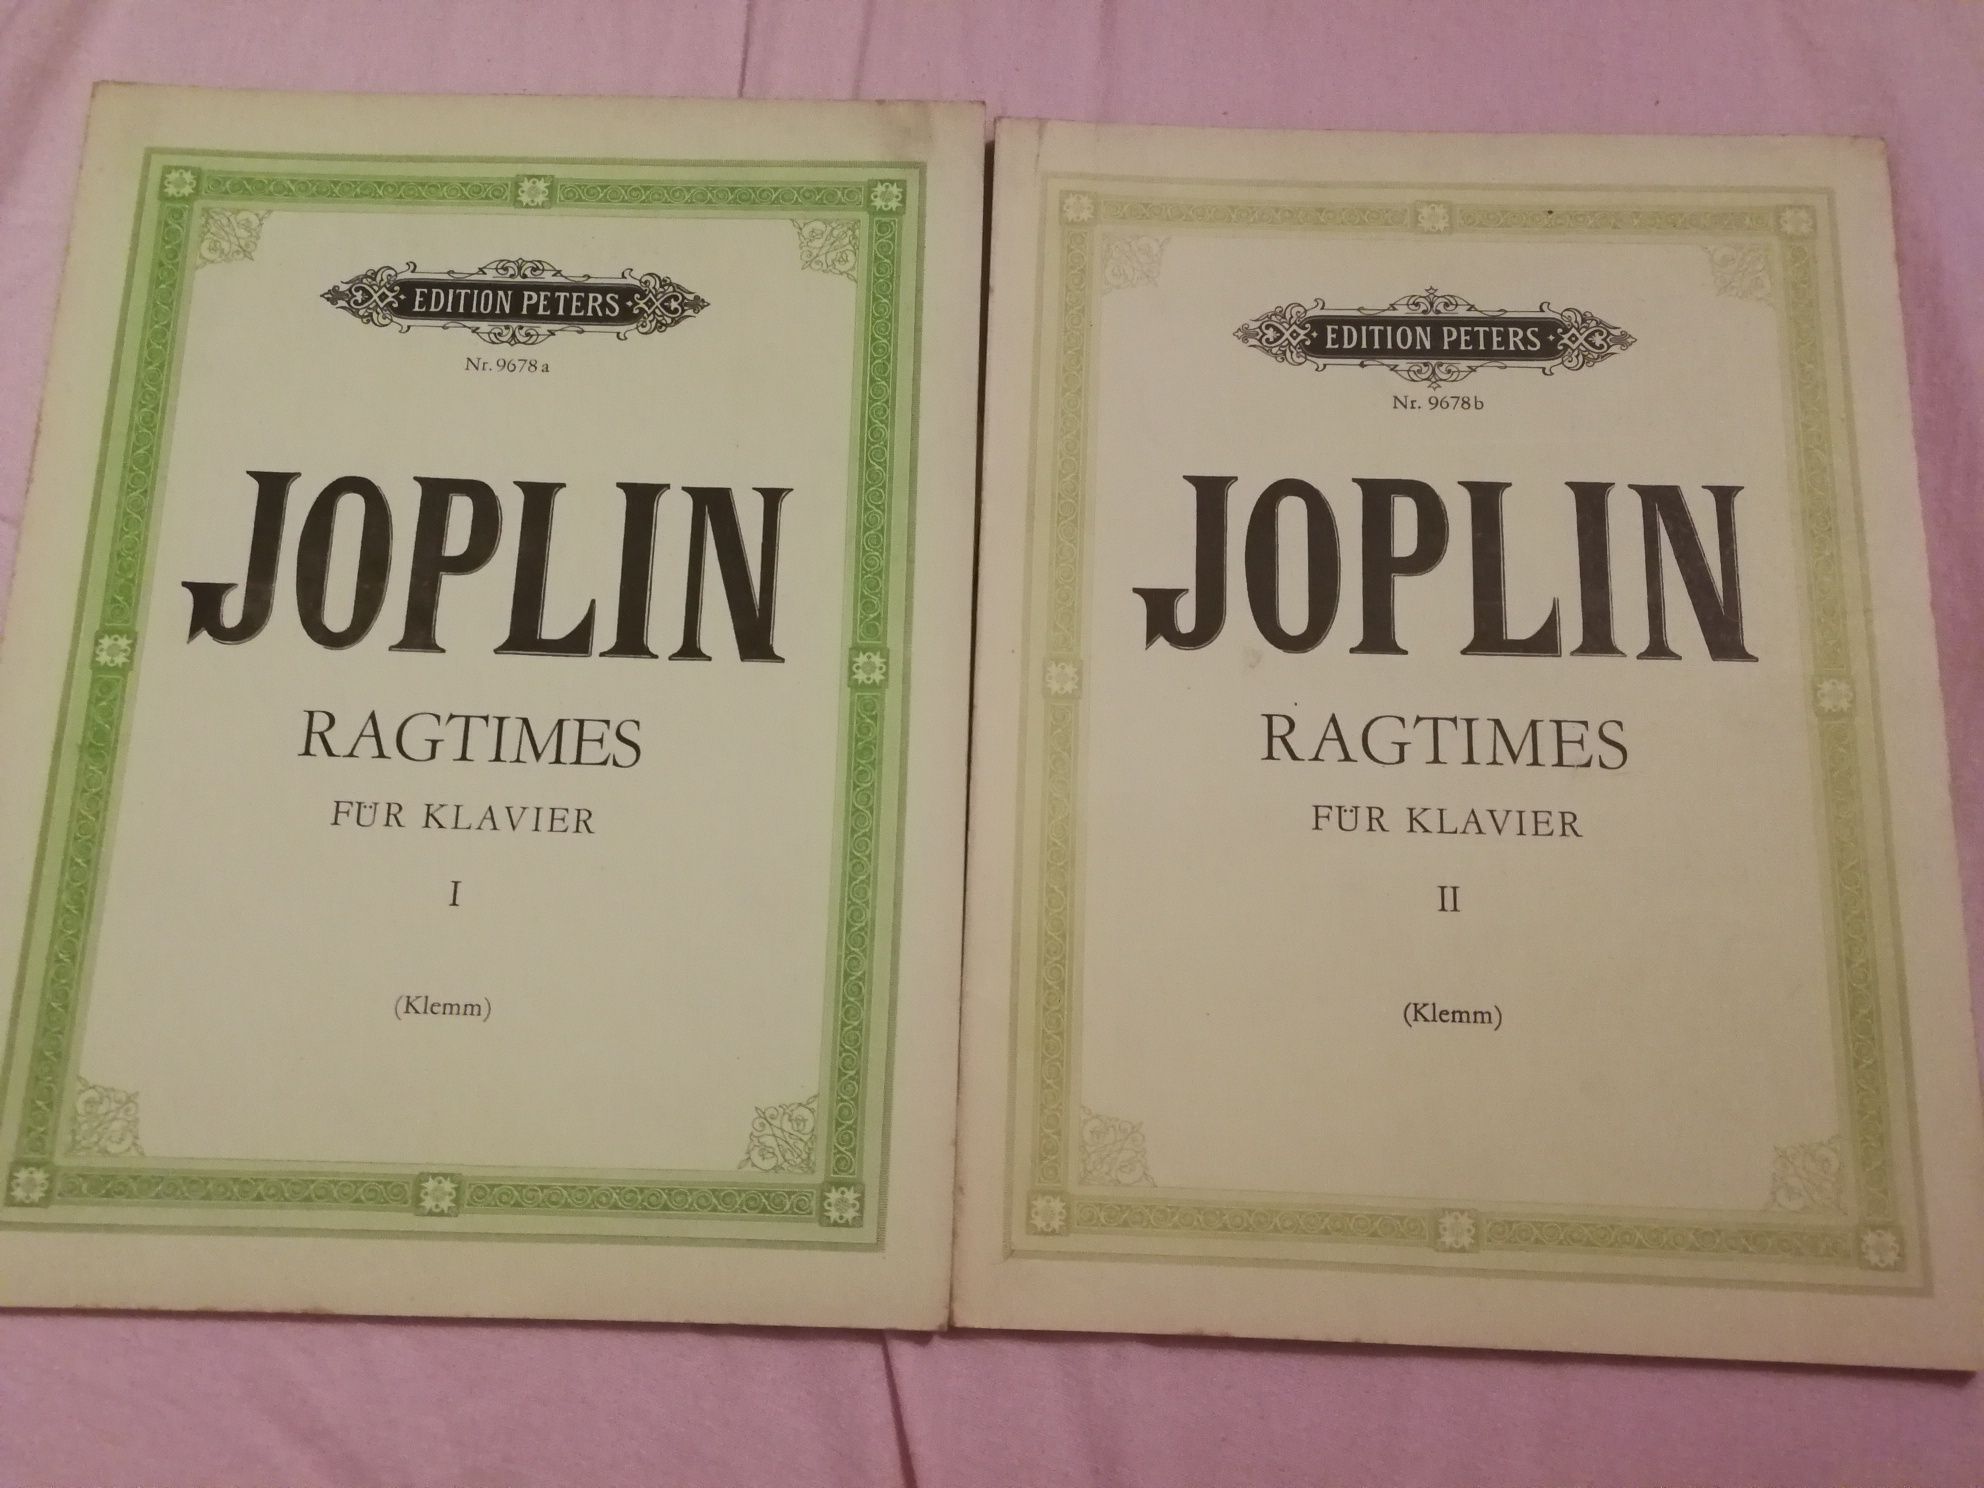 Edition Peters Joplin Ragtimes fur Klavier I and II